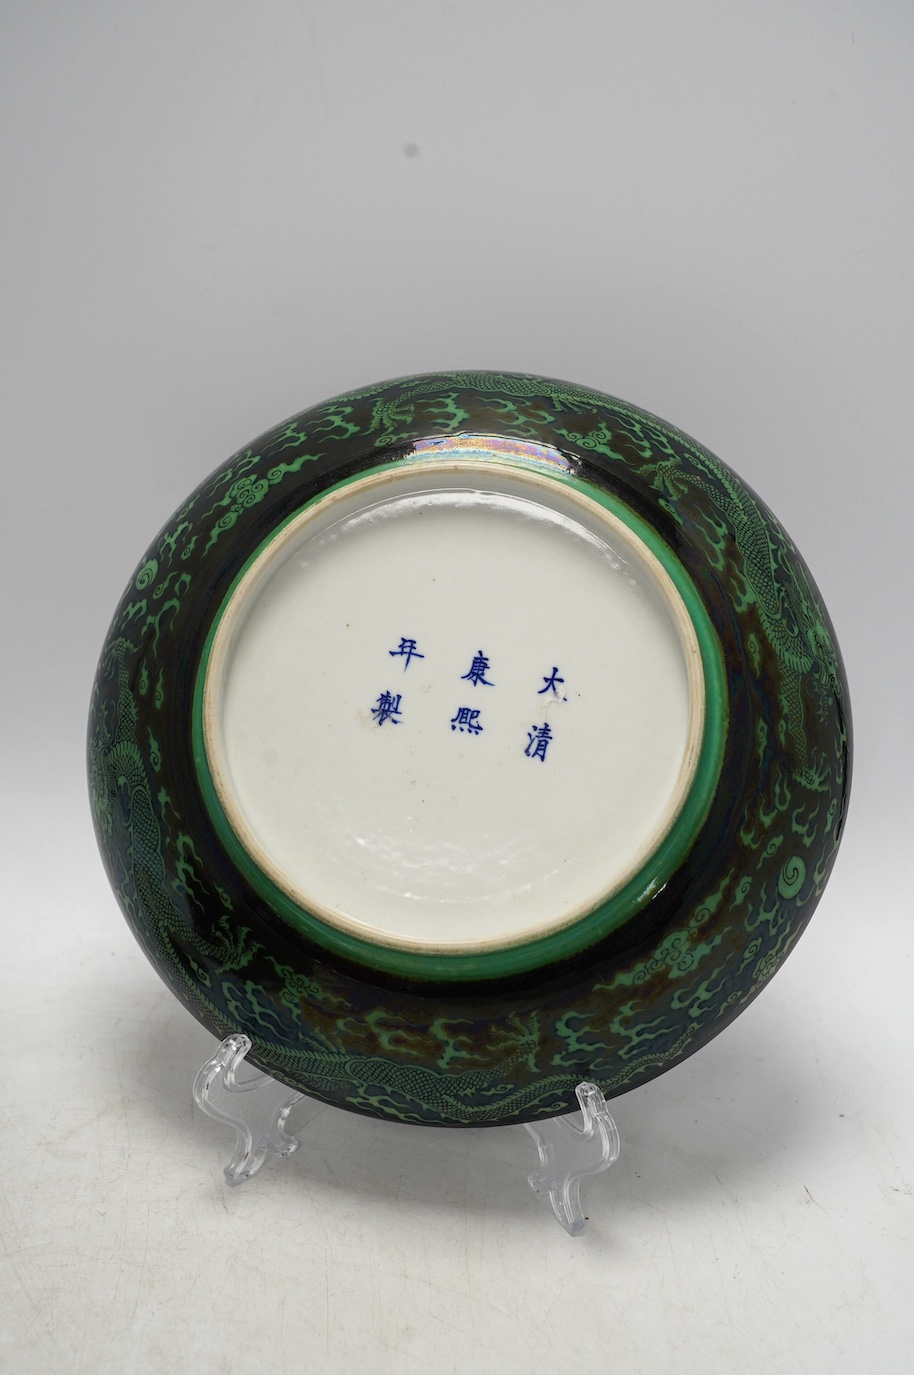 A Chinese famille noire ‘dragon’ dish, 22.5cm diameter, and a Sang de boeuf glaze monk’s cap ewer, Condition - good